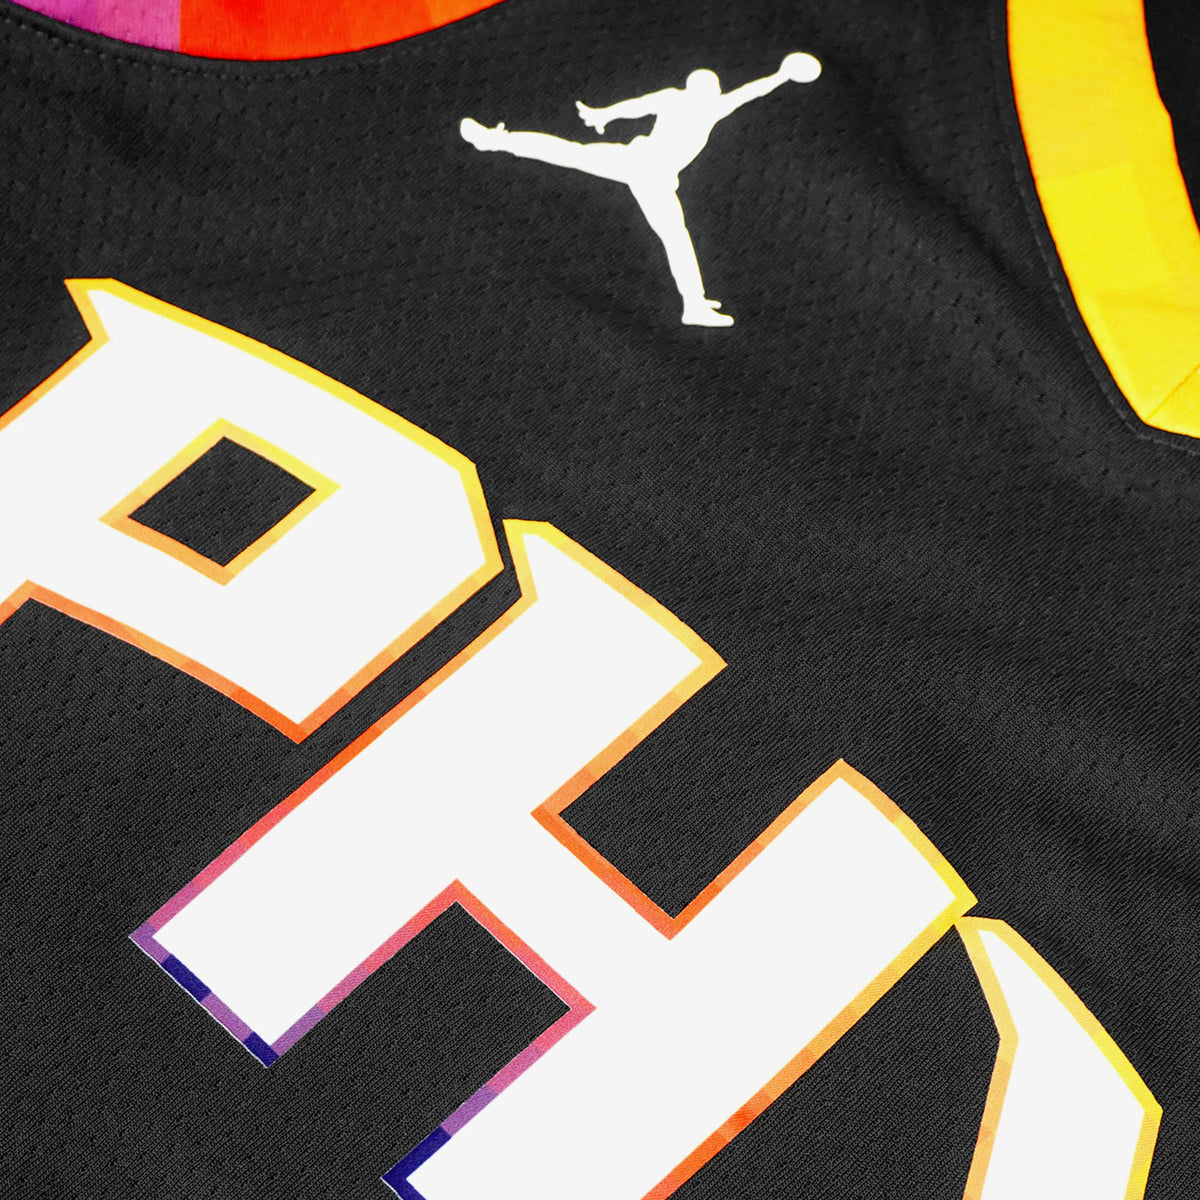 Chris Paul Phoenix Suns Statement Edition Swingman Jersey - Black